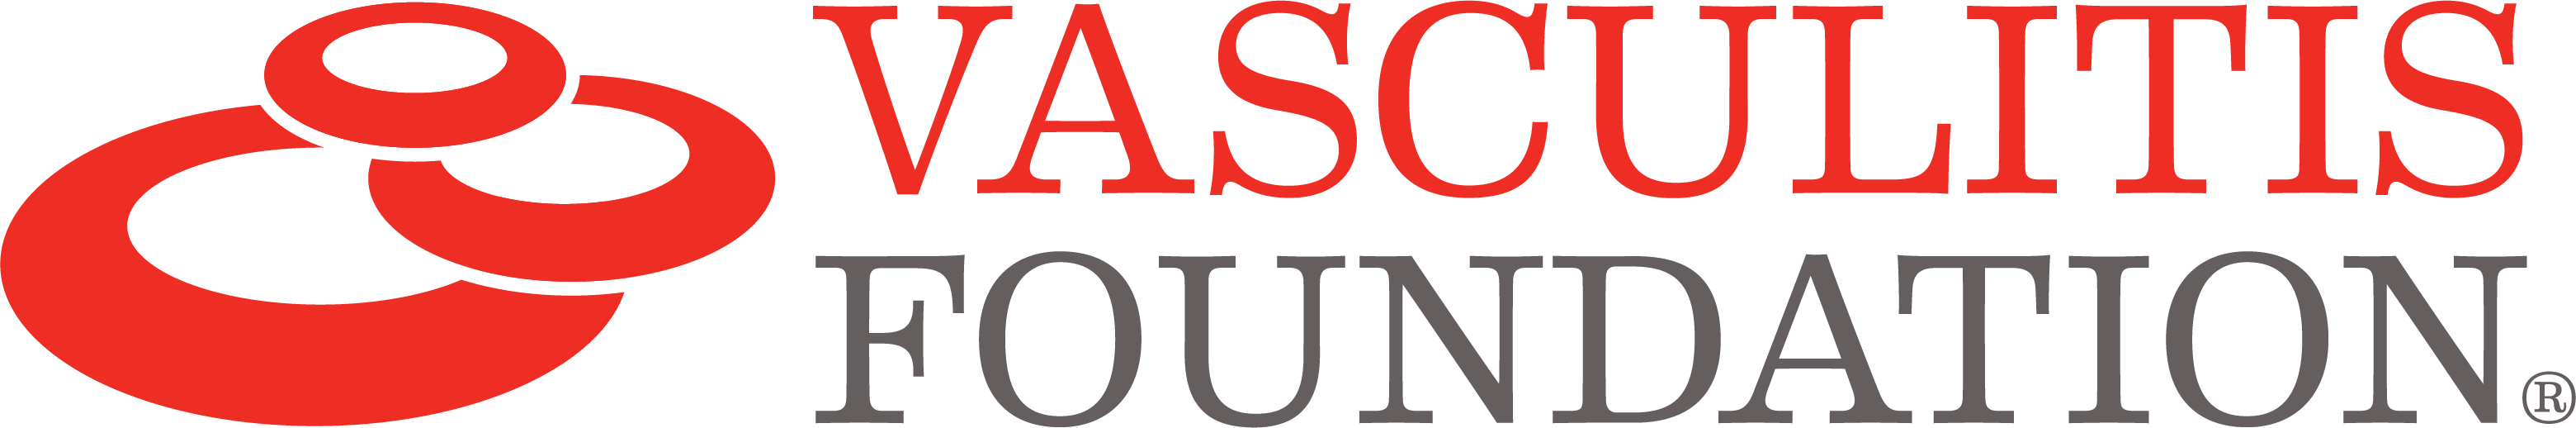 Vasculitis Foundation Research Portal logo